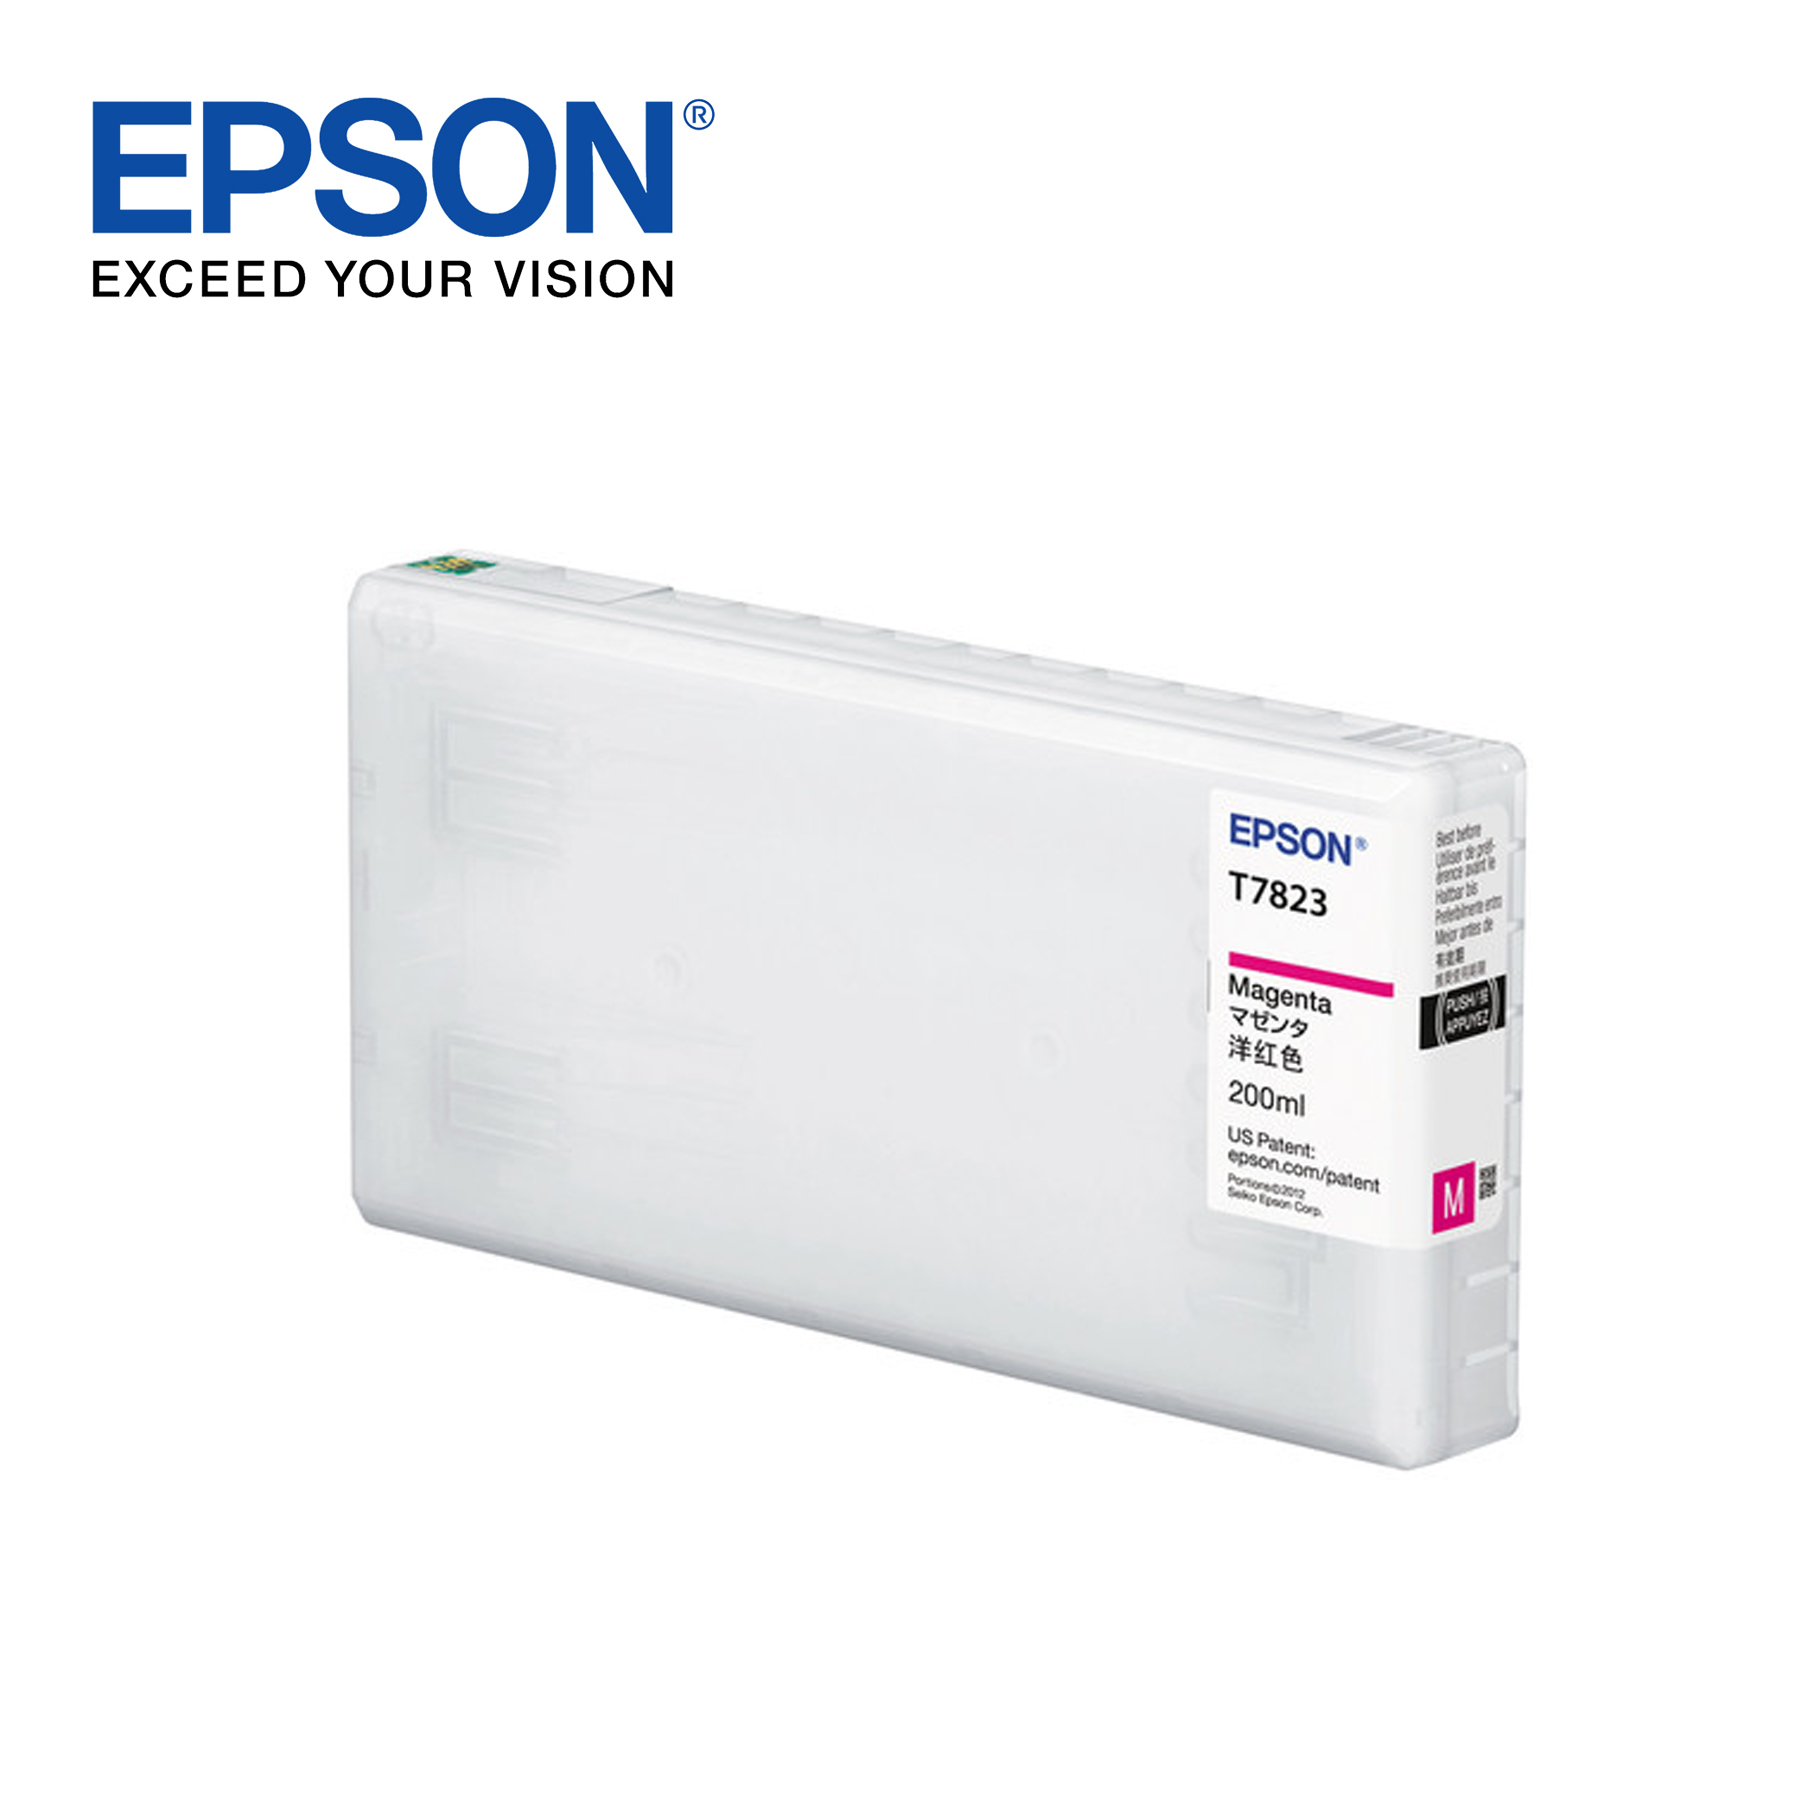 Epson Ink Cartridge for Surelab SL-D700 Photo Printer – Magenta